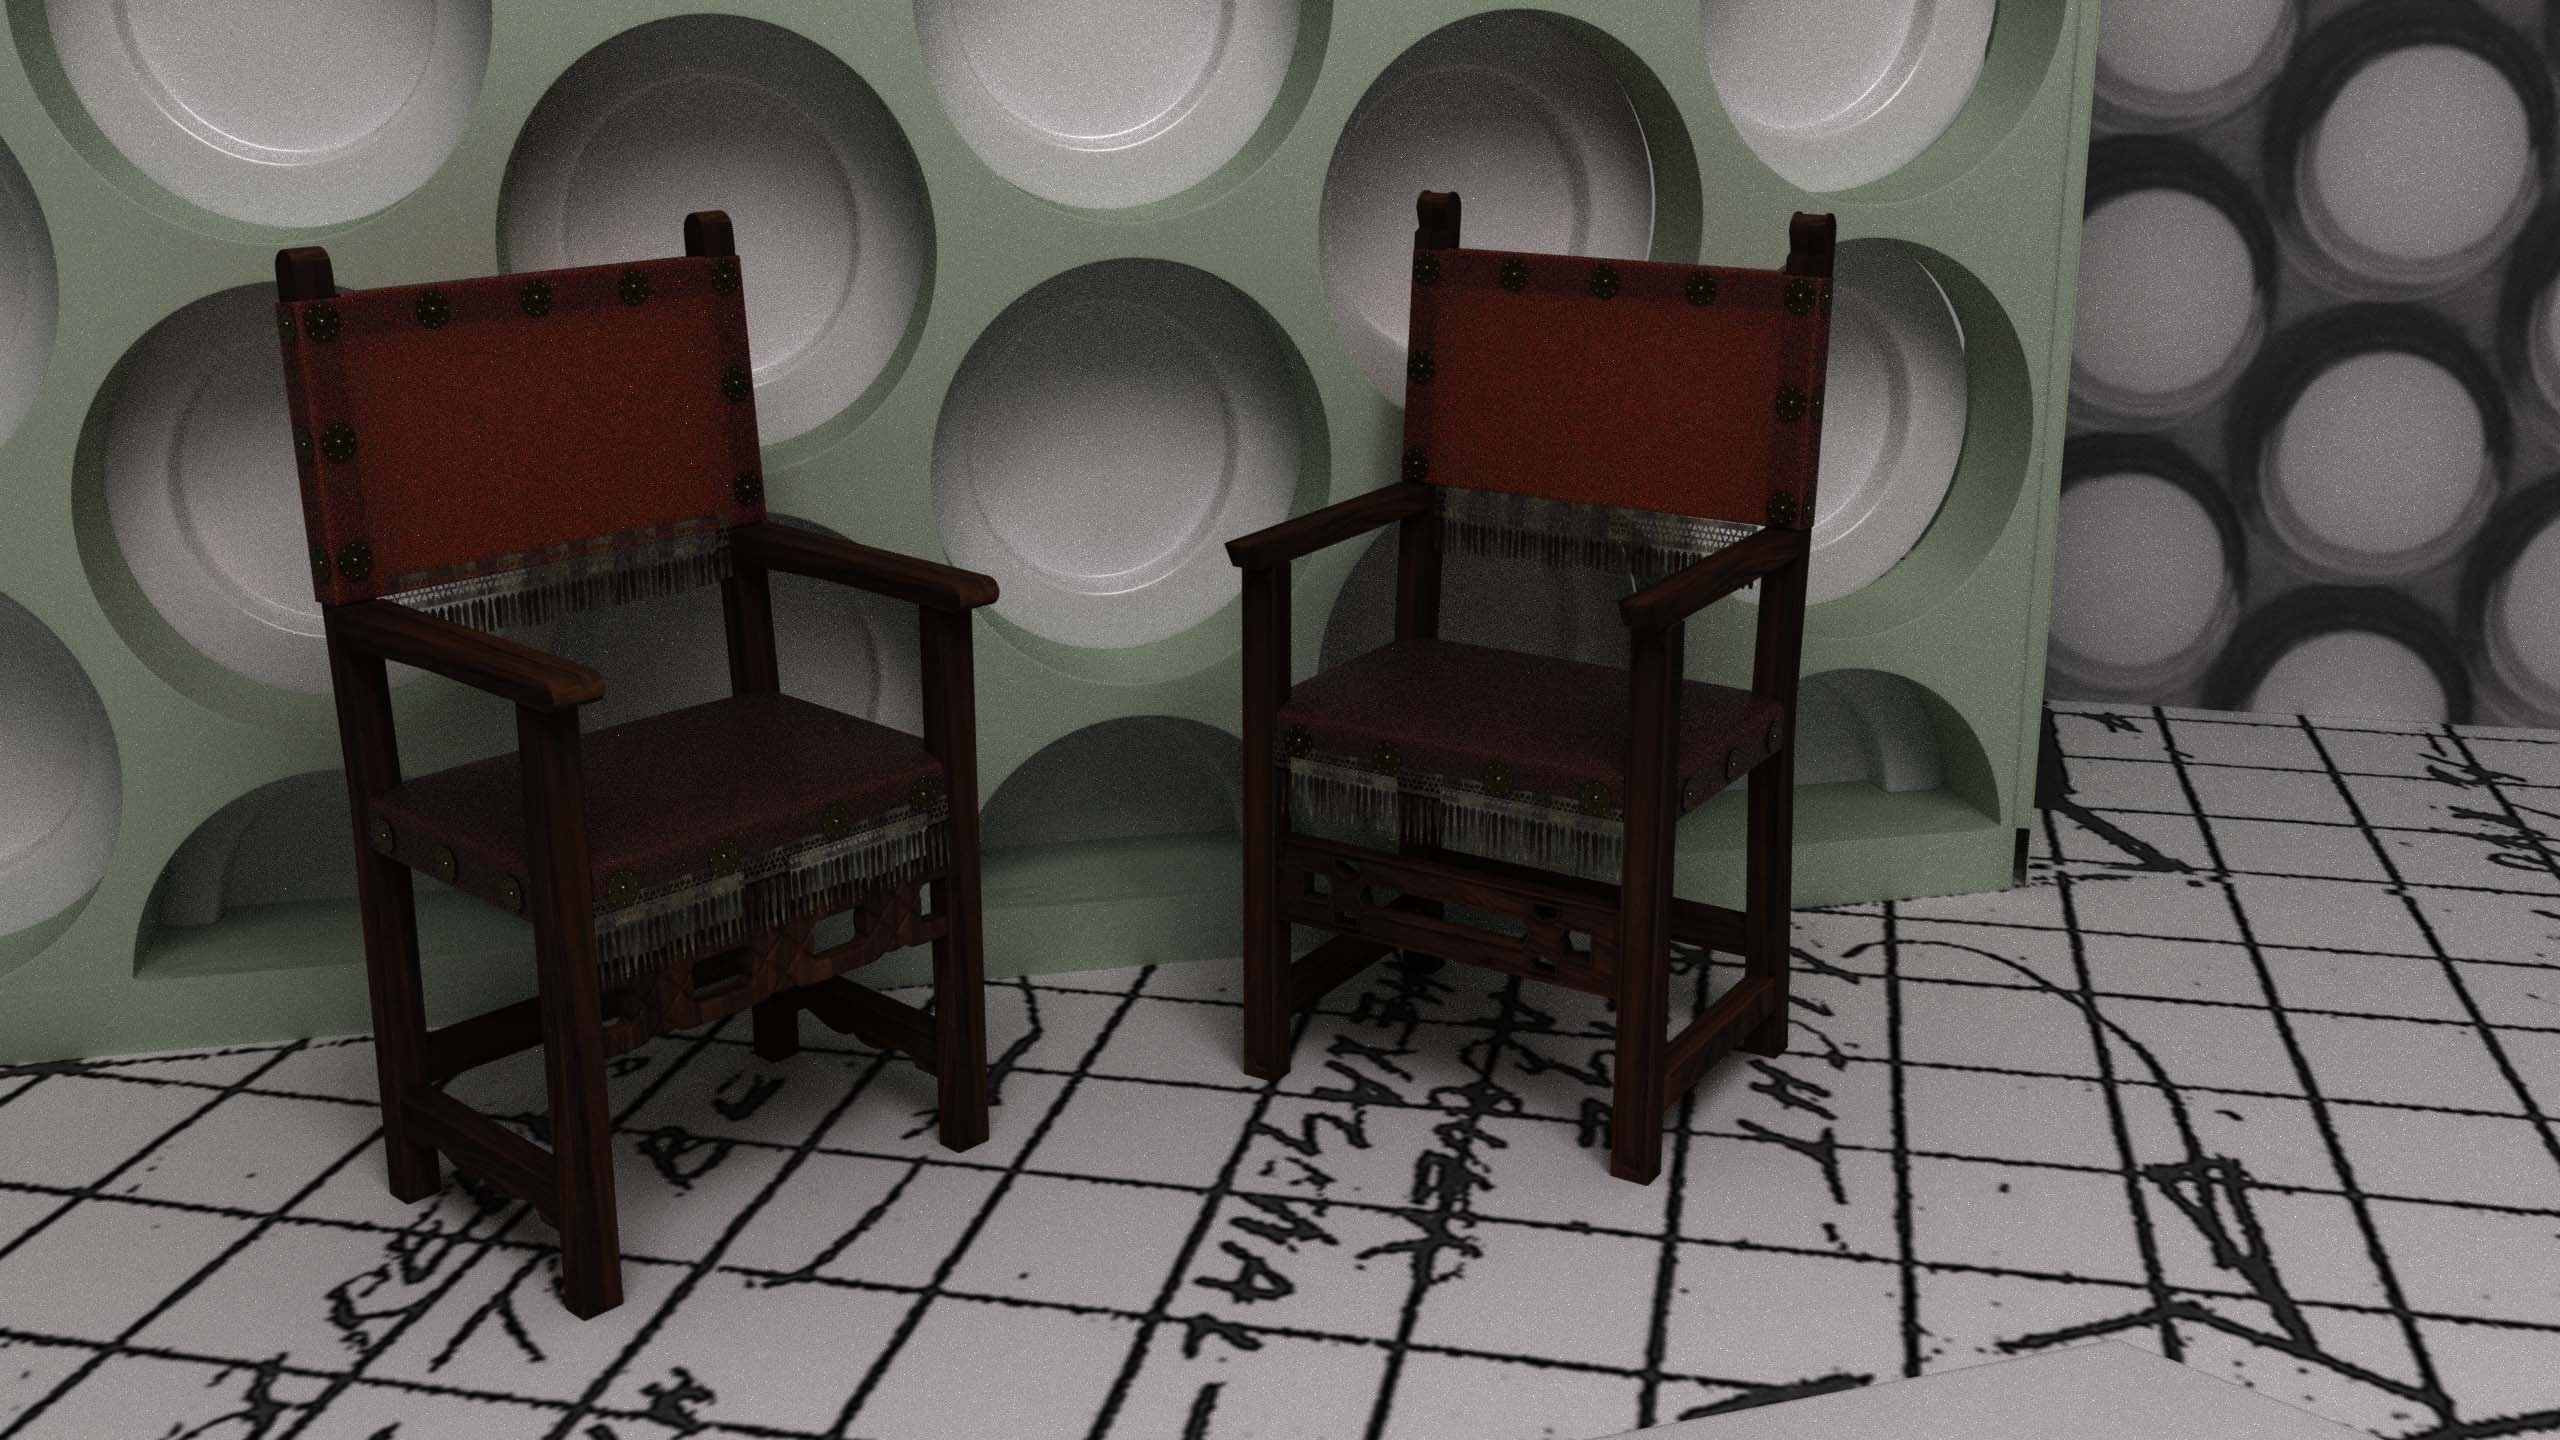 20220917-01 New Artisan Chairs  (2560x1440)(2k)(11m55s).jpg